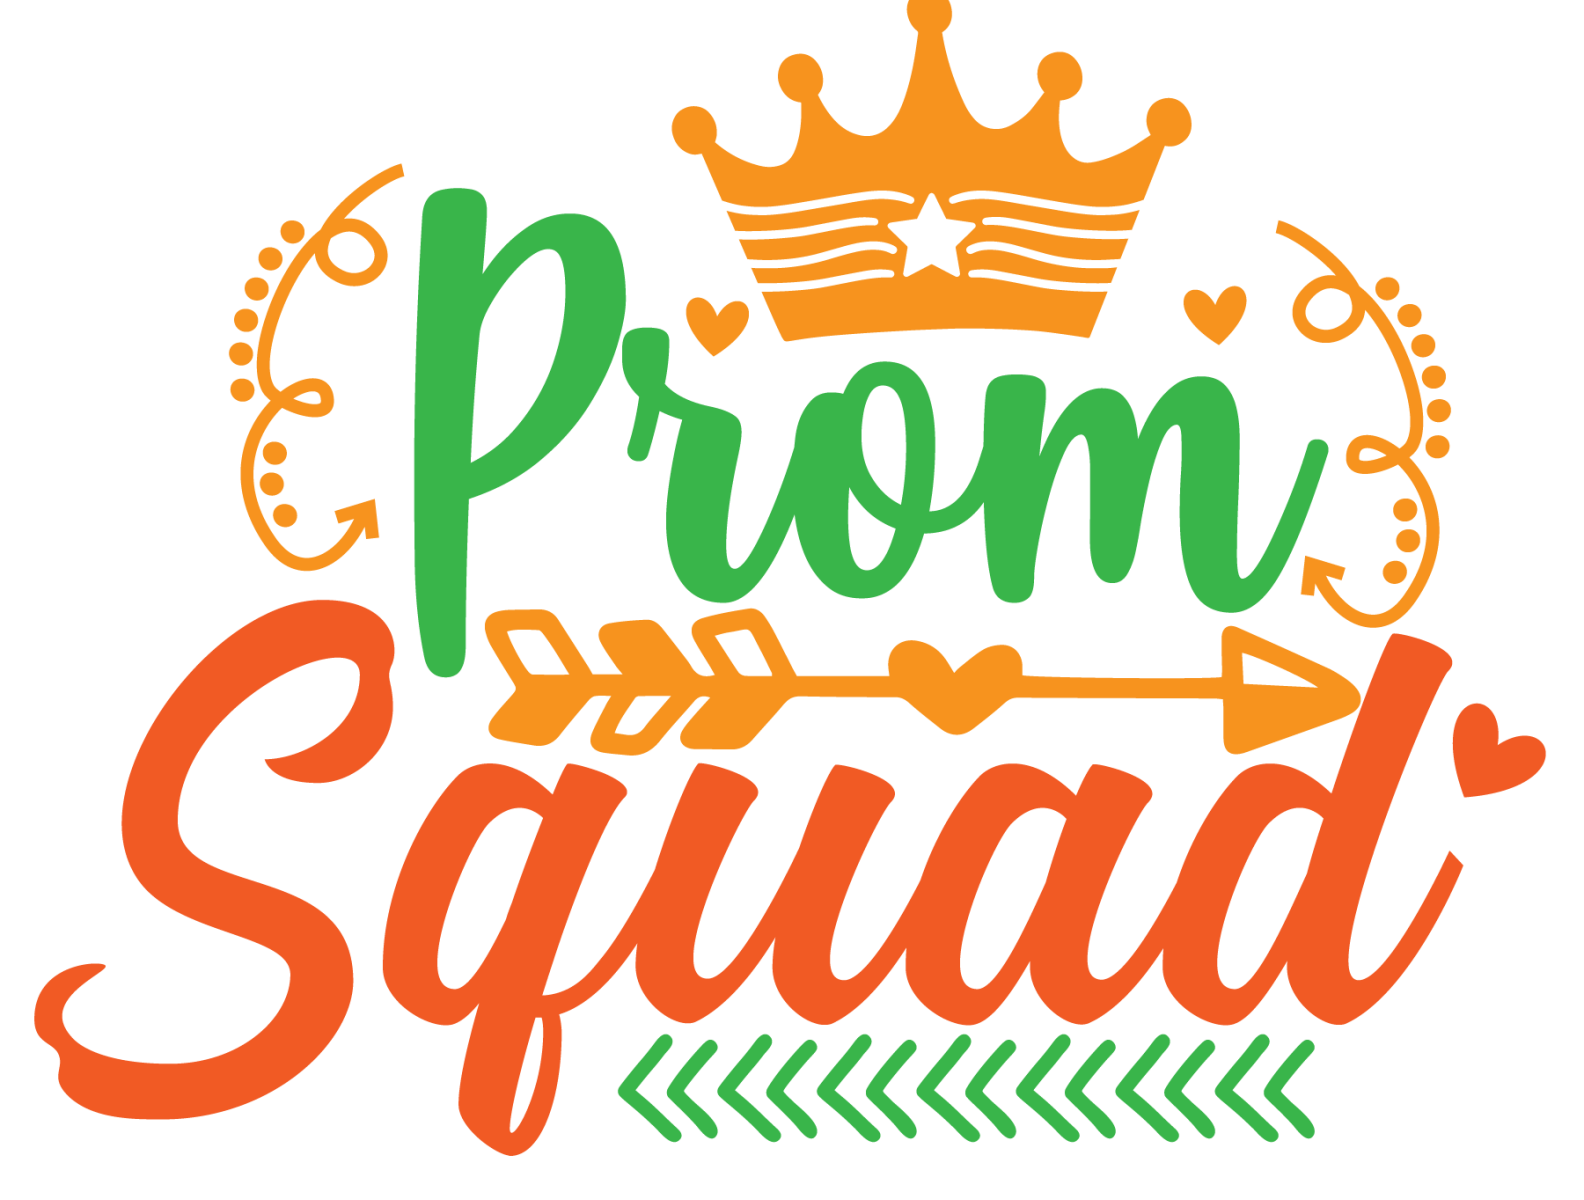 Prom Squad Design by Krellio on Dribbble